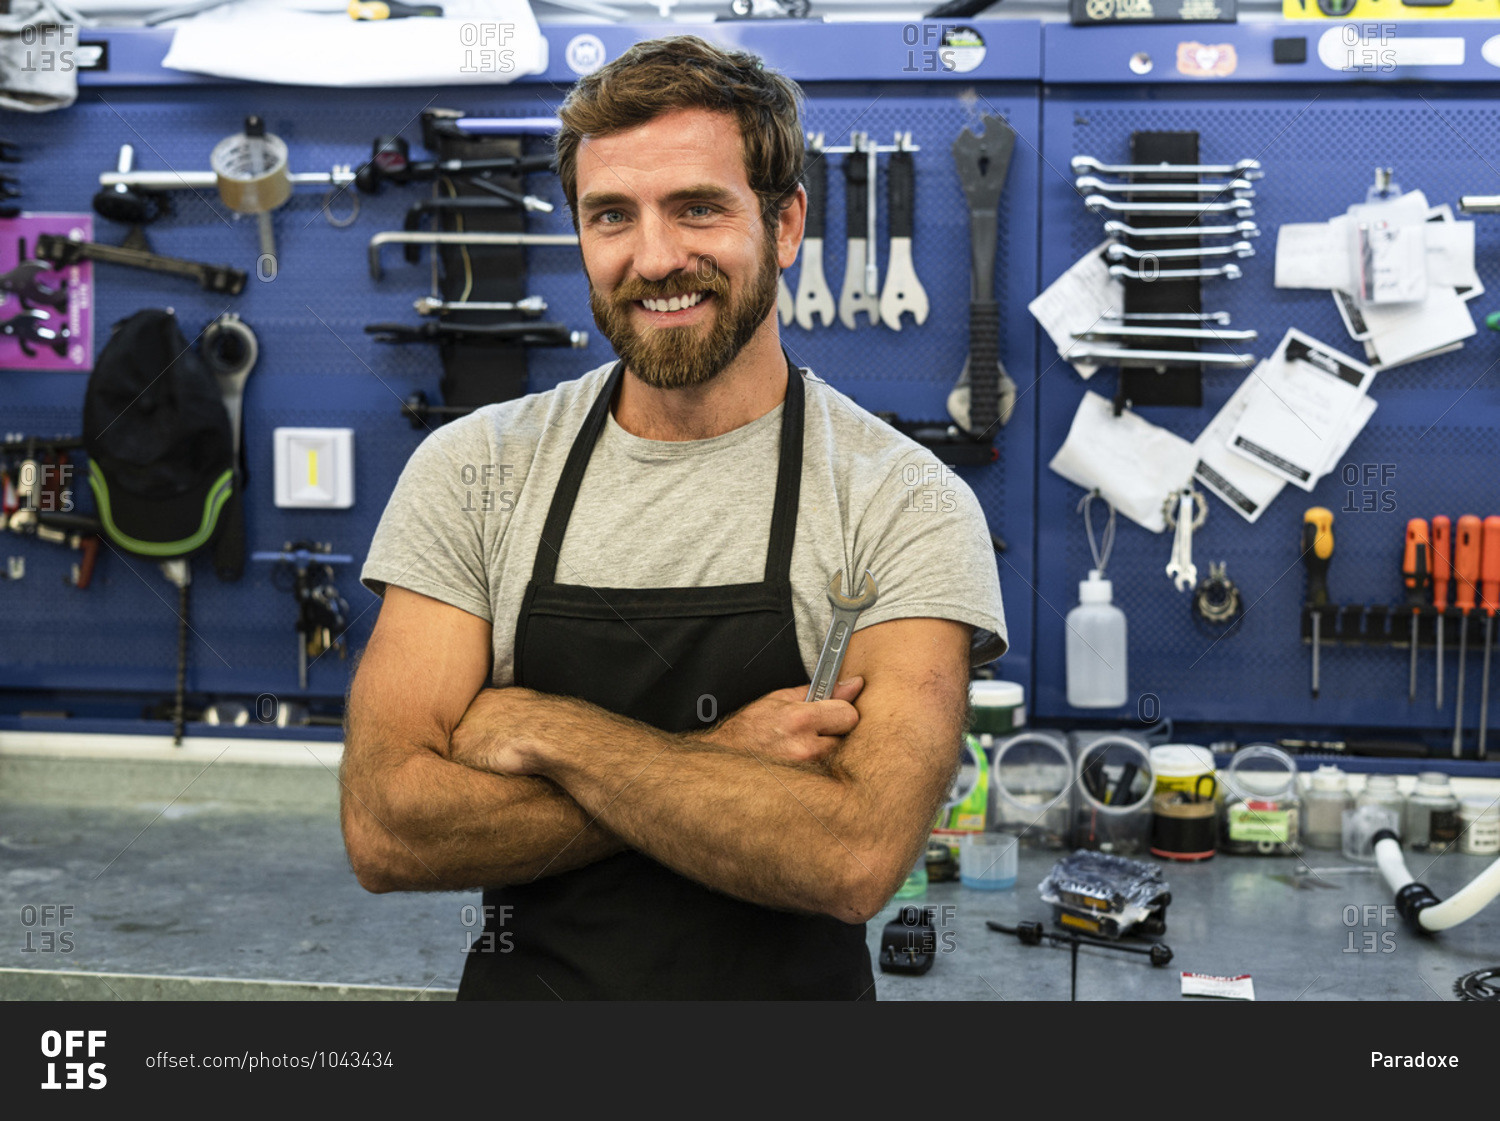 Smiling mechanic standing in workshop